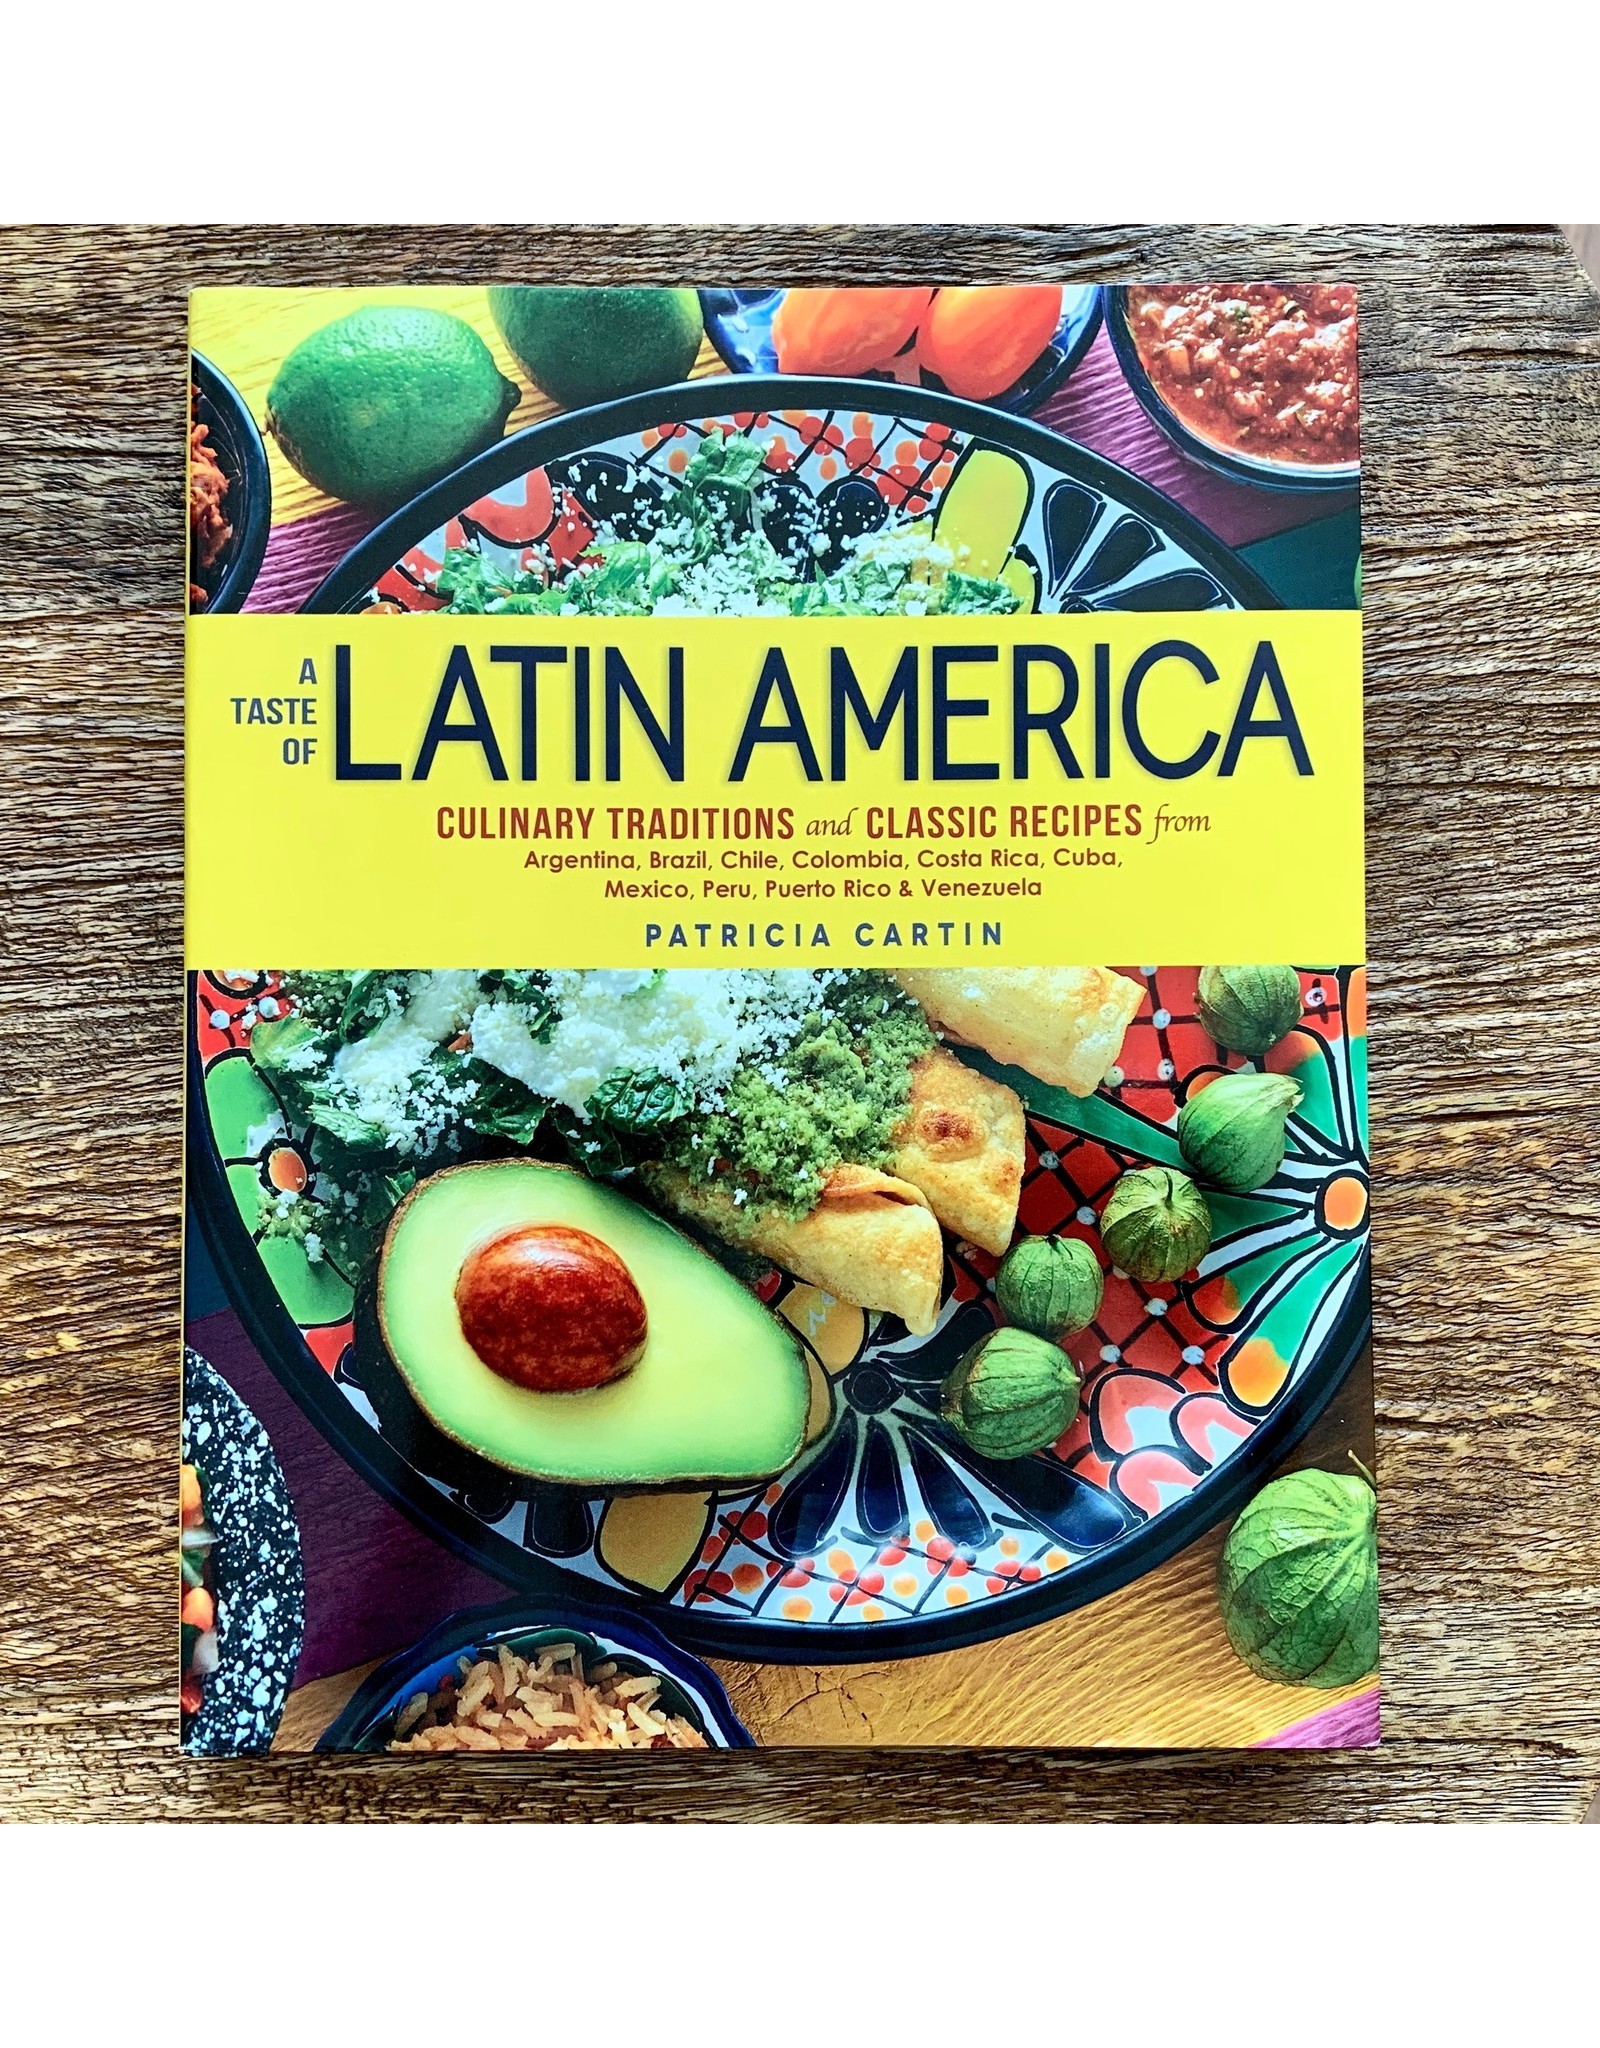 Cookbook "A Taste of Latin America"